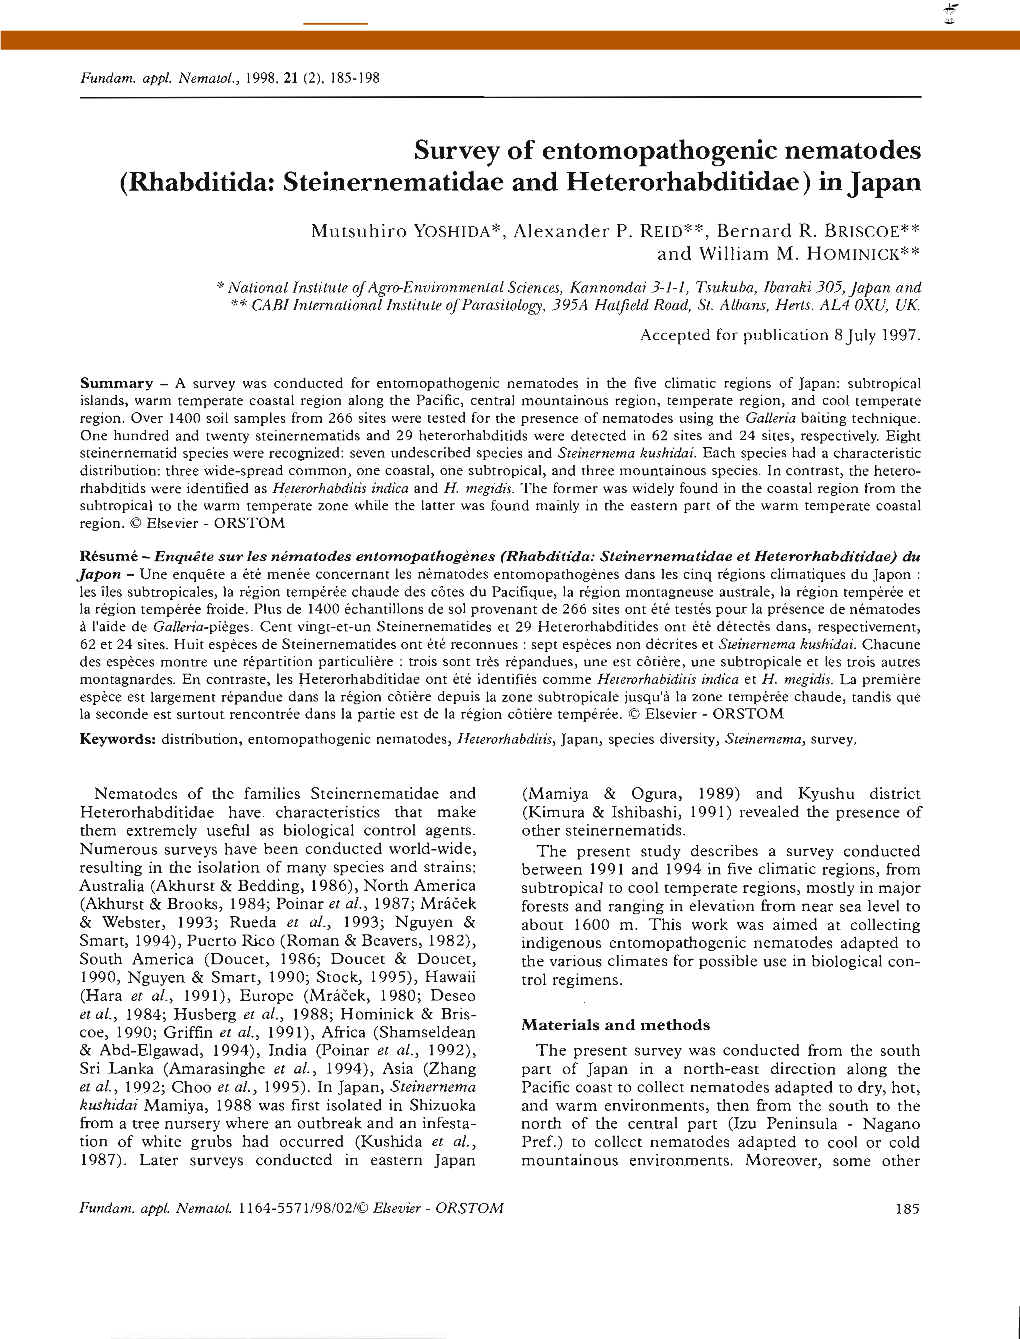 Survey of Entomopathogenic Nematodes (Rhabditida: Steinernematidae and Heterorhabditidae) in Japan